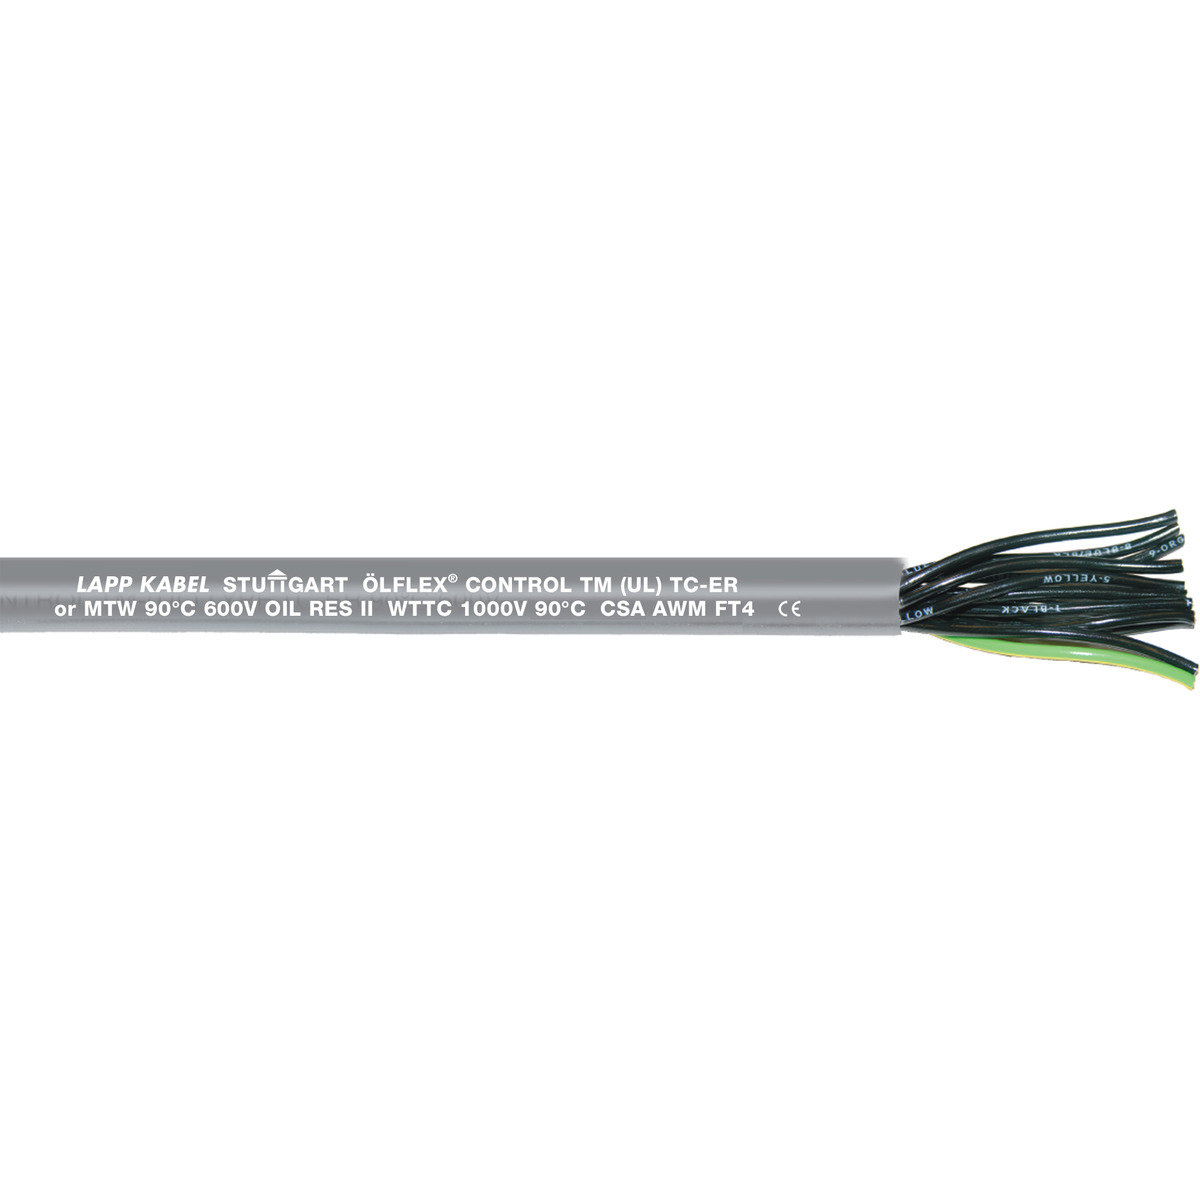 ÖLFLEX® CONTROL TM control cable